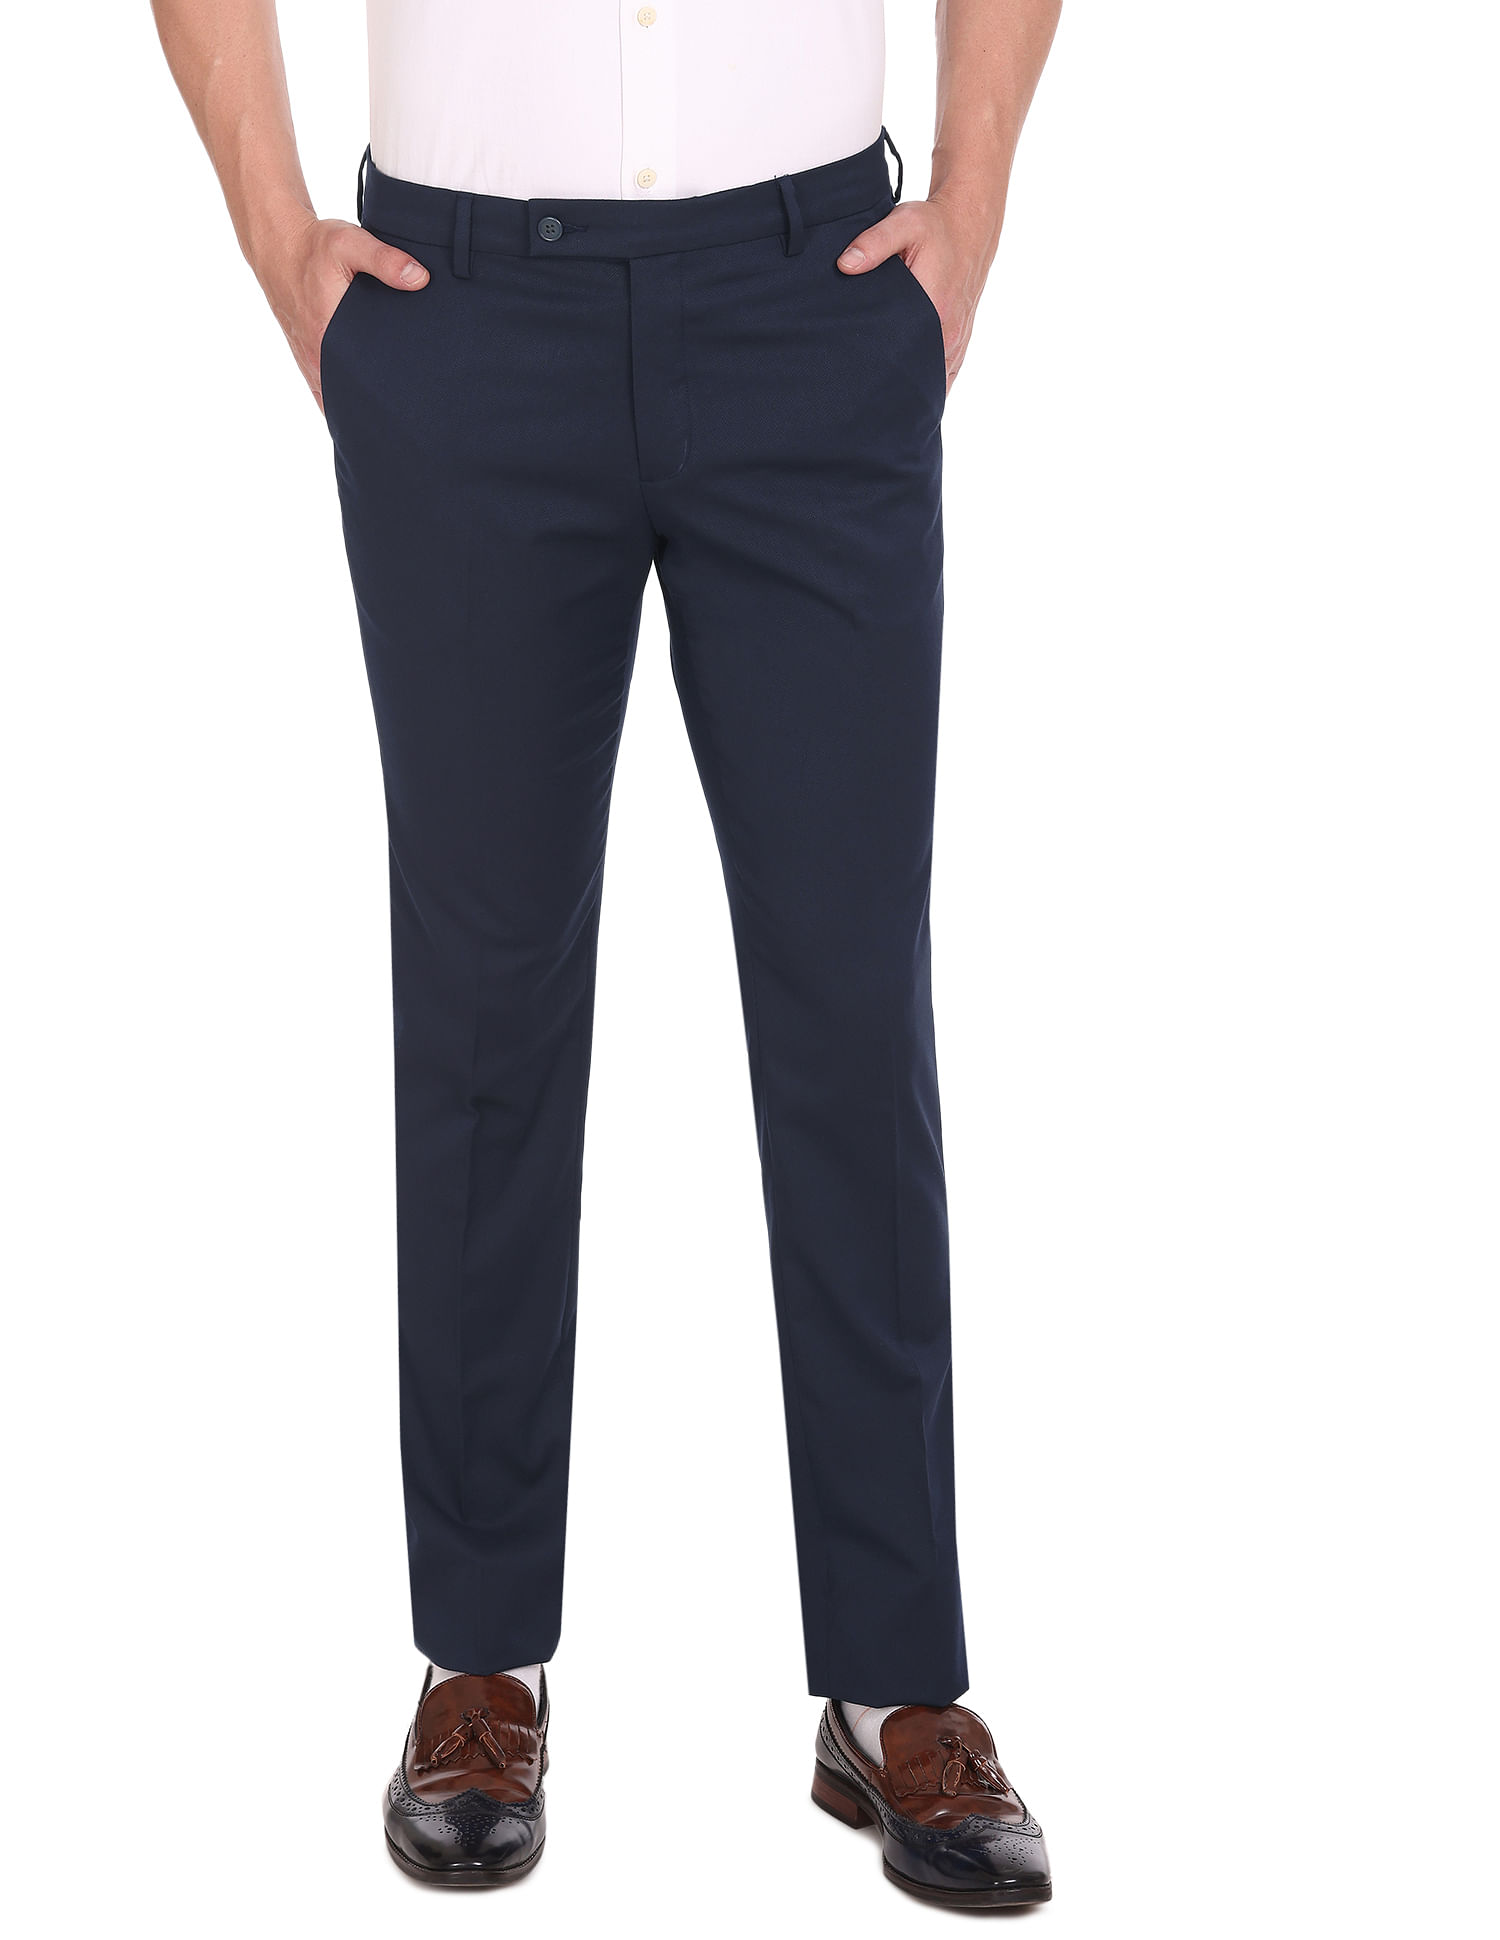 Buy Arrow Dark Blue Checkered Formal Trouser ARADOTR272230 at Amazonin